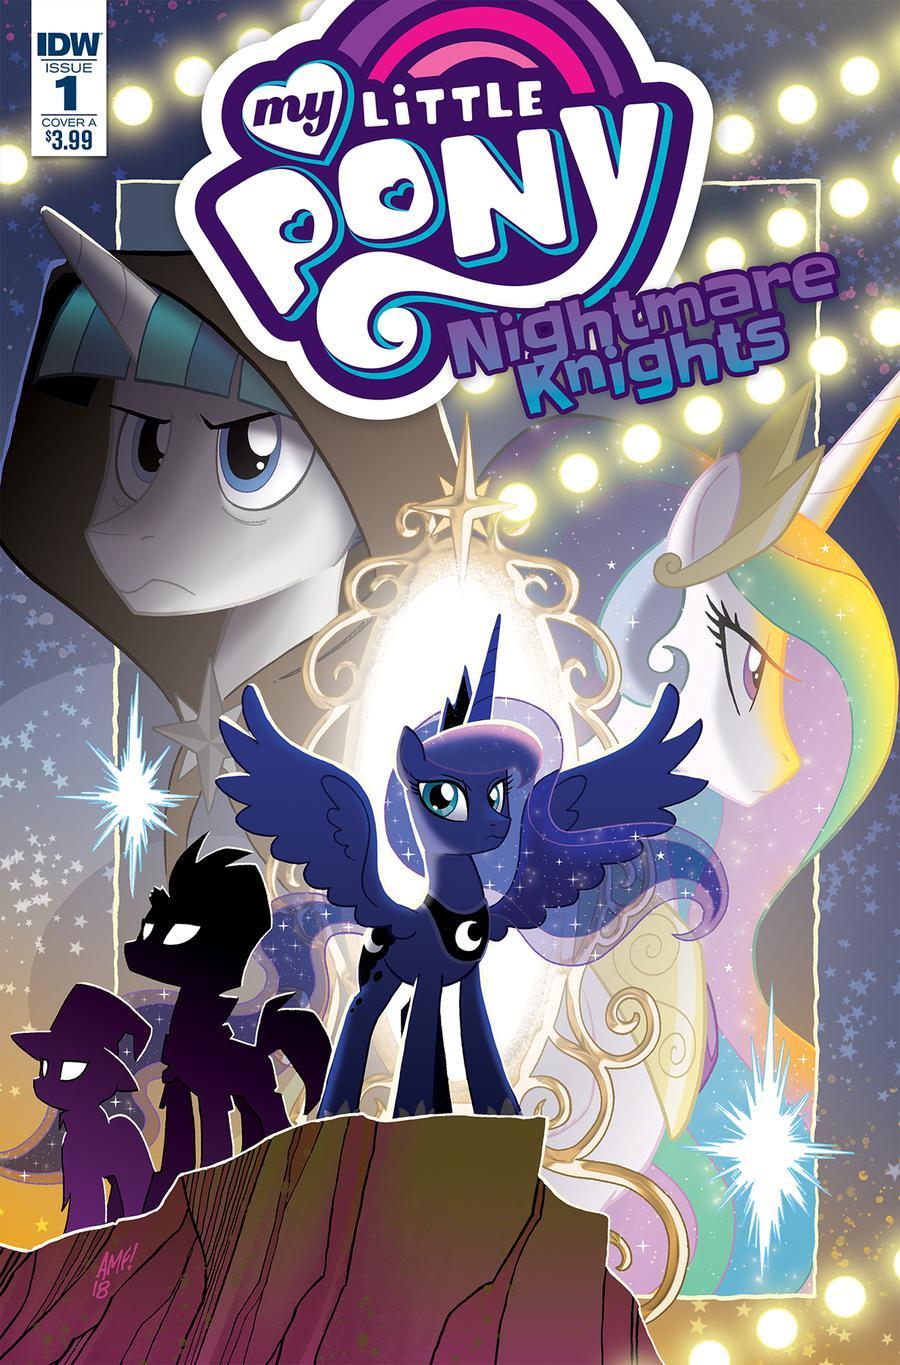 My Little Pony Nightmare Knights Vol. 1 #1